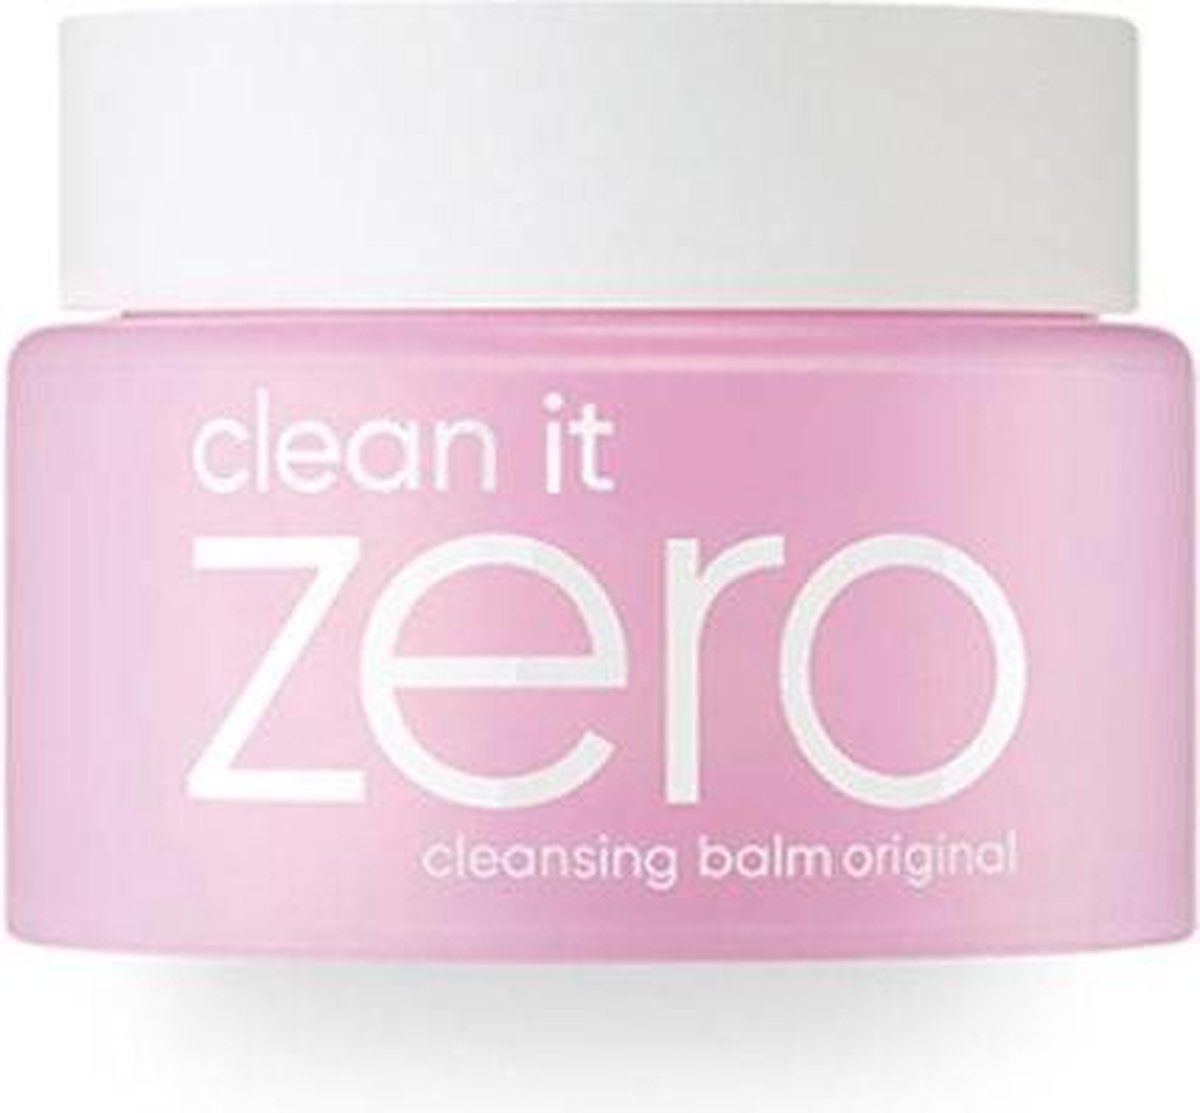 Clean it Zero Cleansing Balm original | Banila Co. | Koreaanse make-up remover - cleansing balm